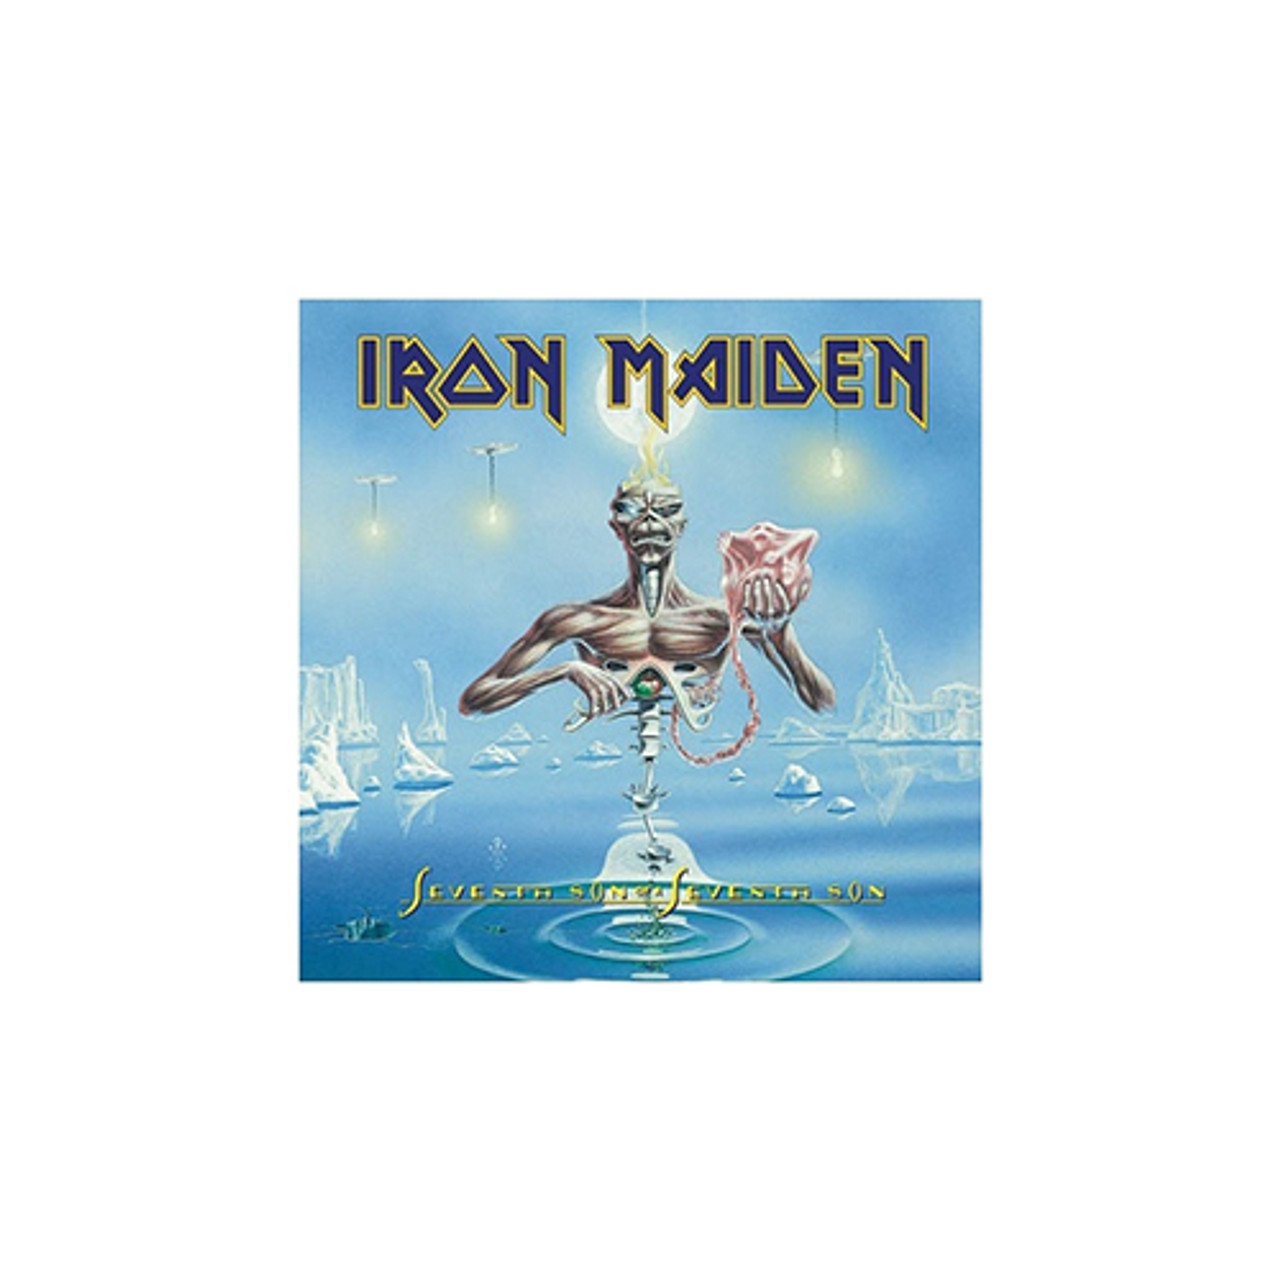 Iron Maiden - Seventh Son of a Son (180g Vinyl Direct